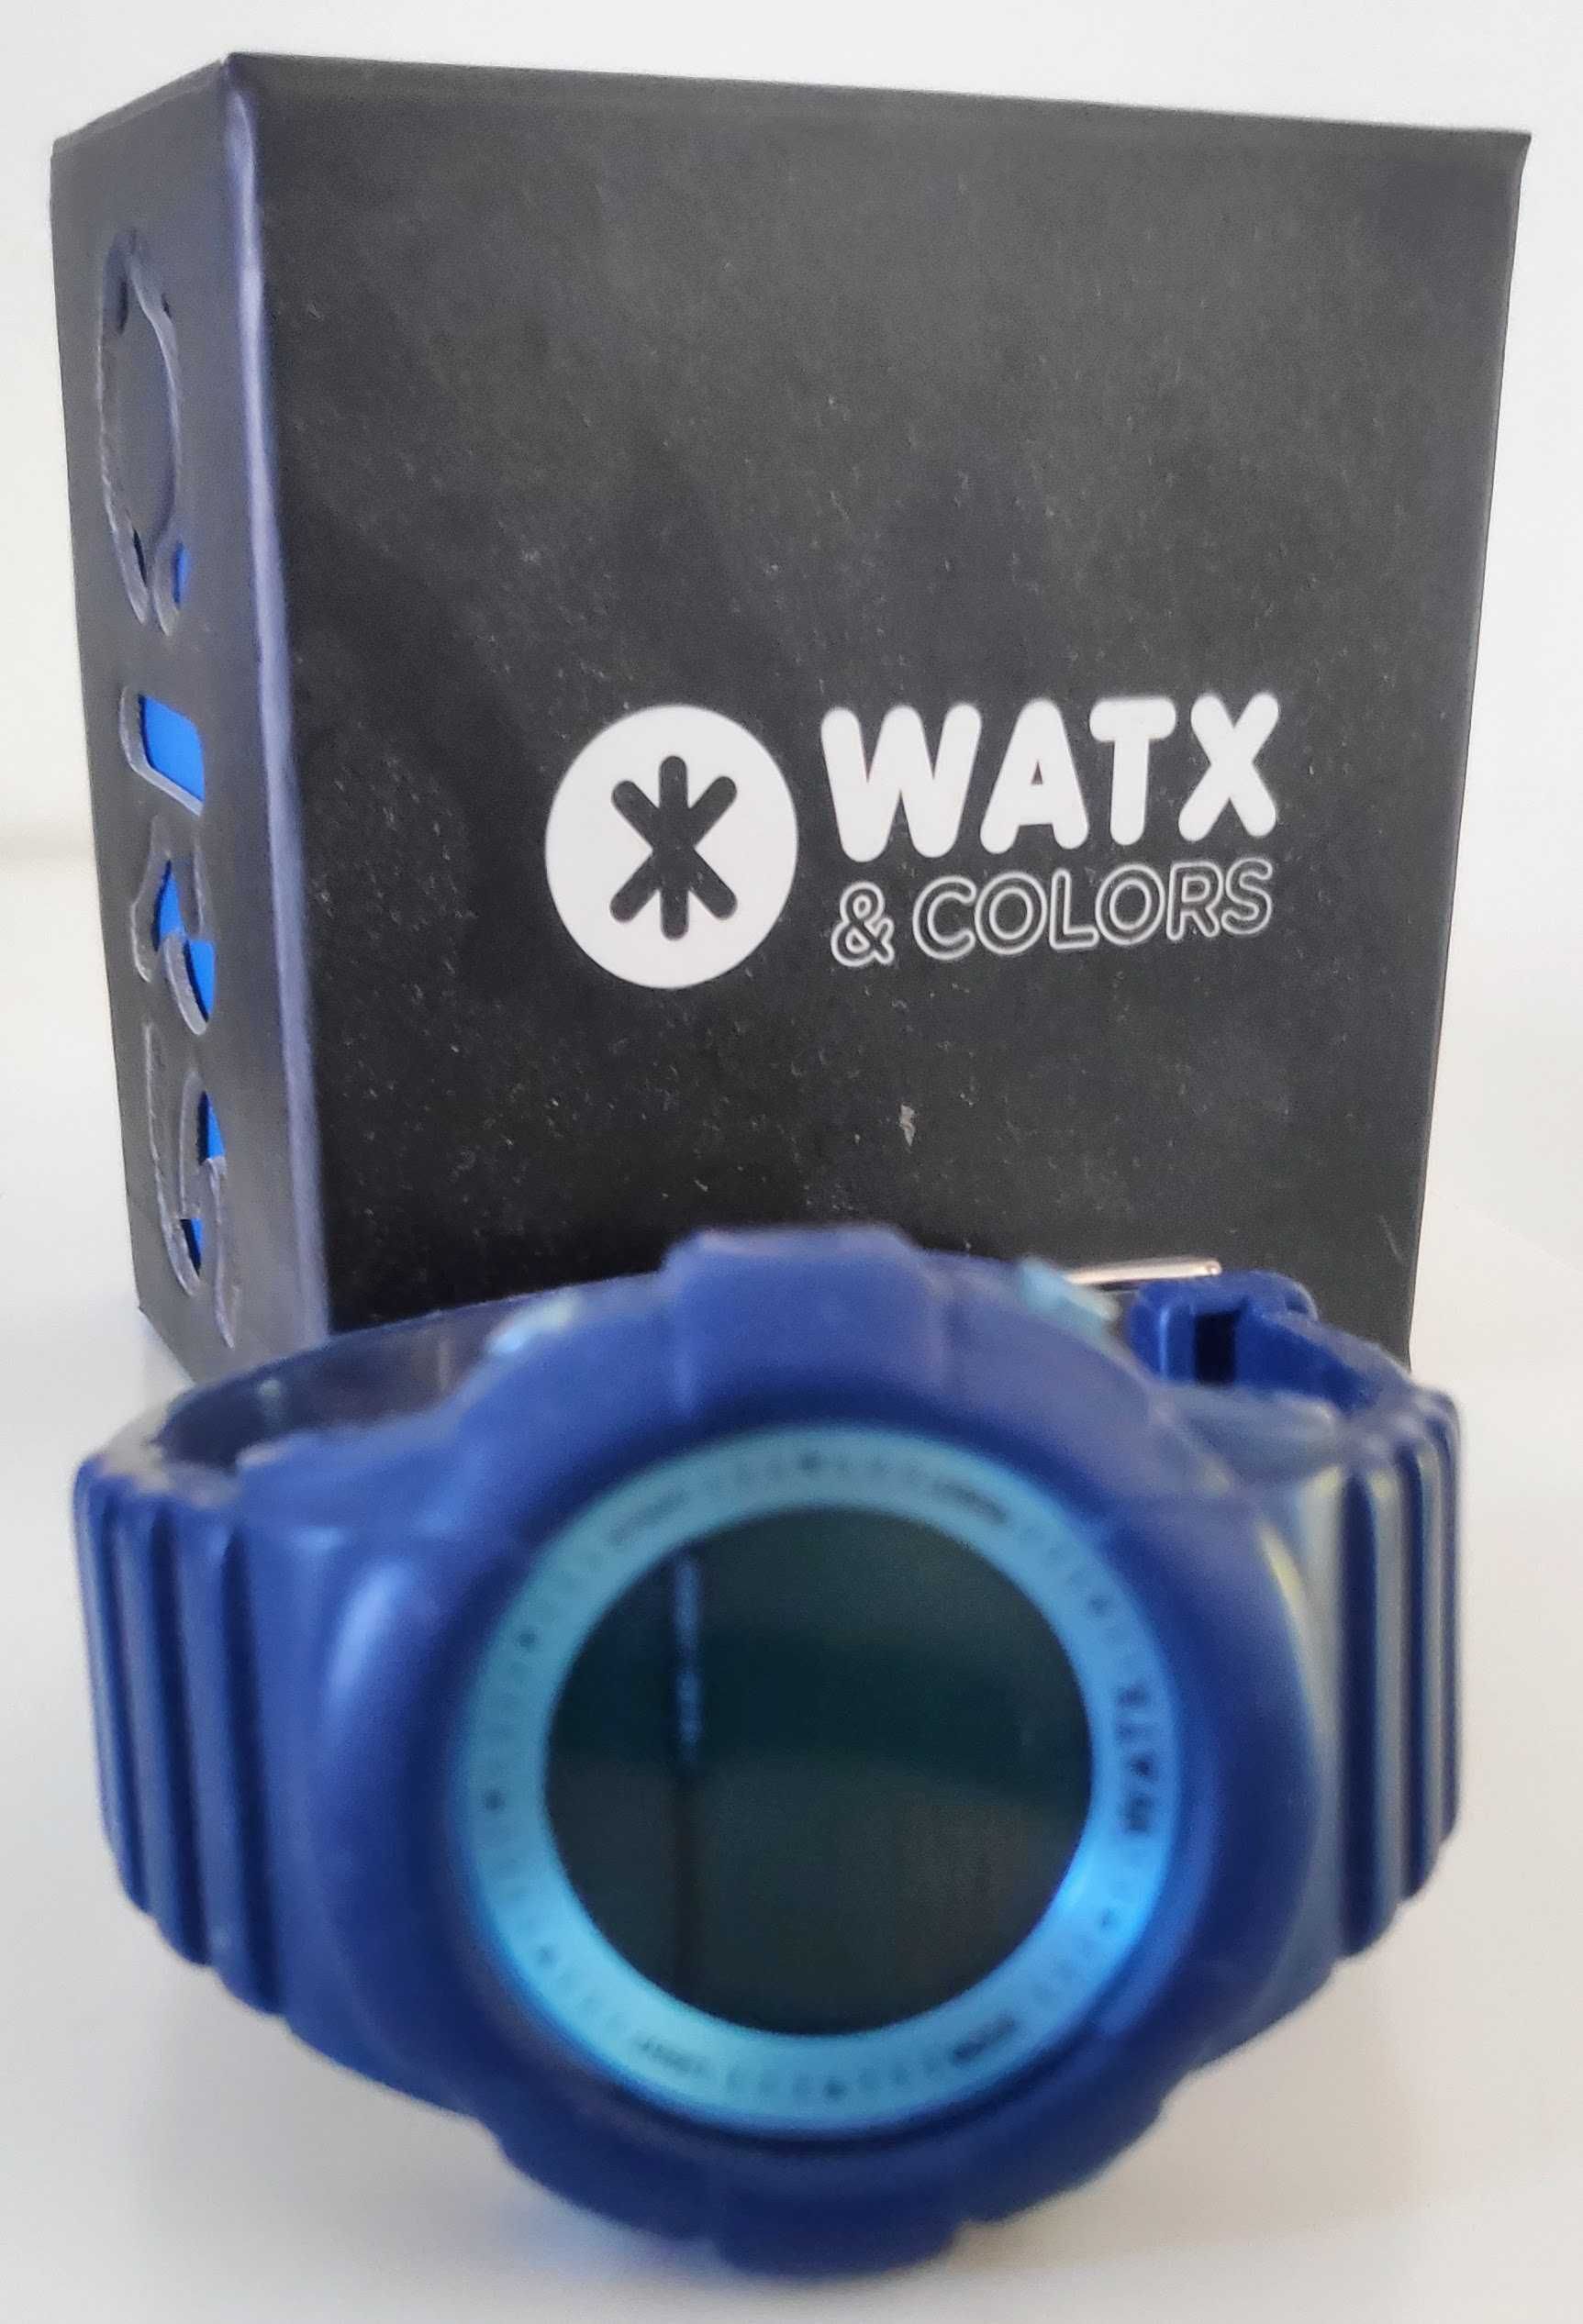 Relógio Watx & Colors RWA 1004